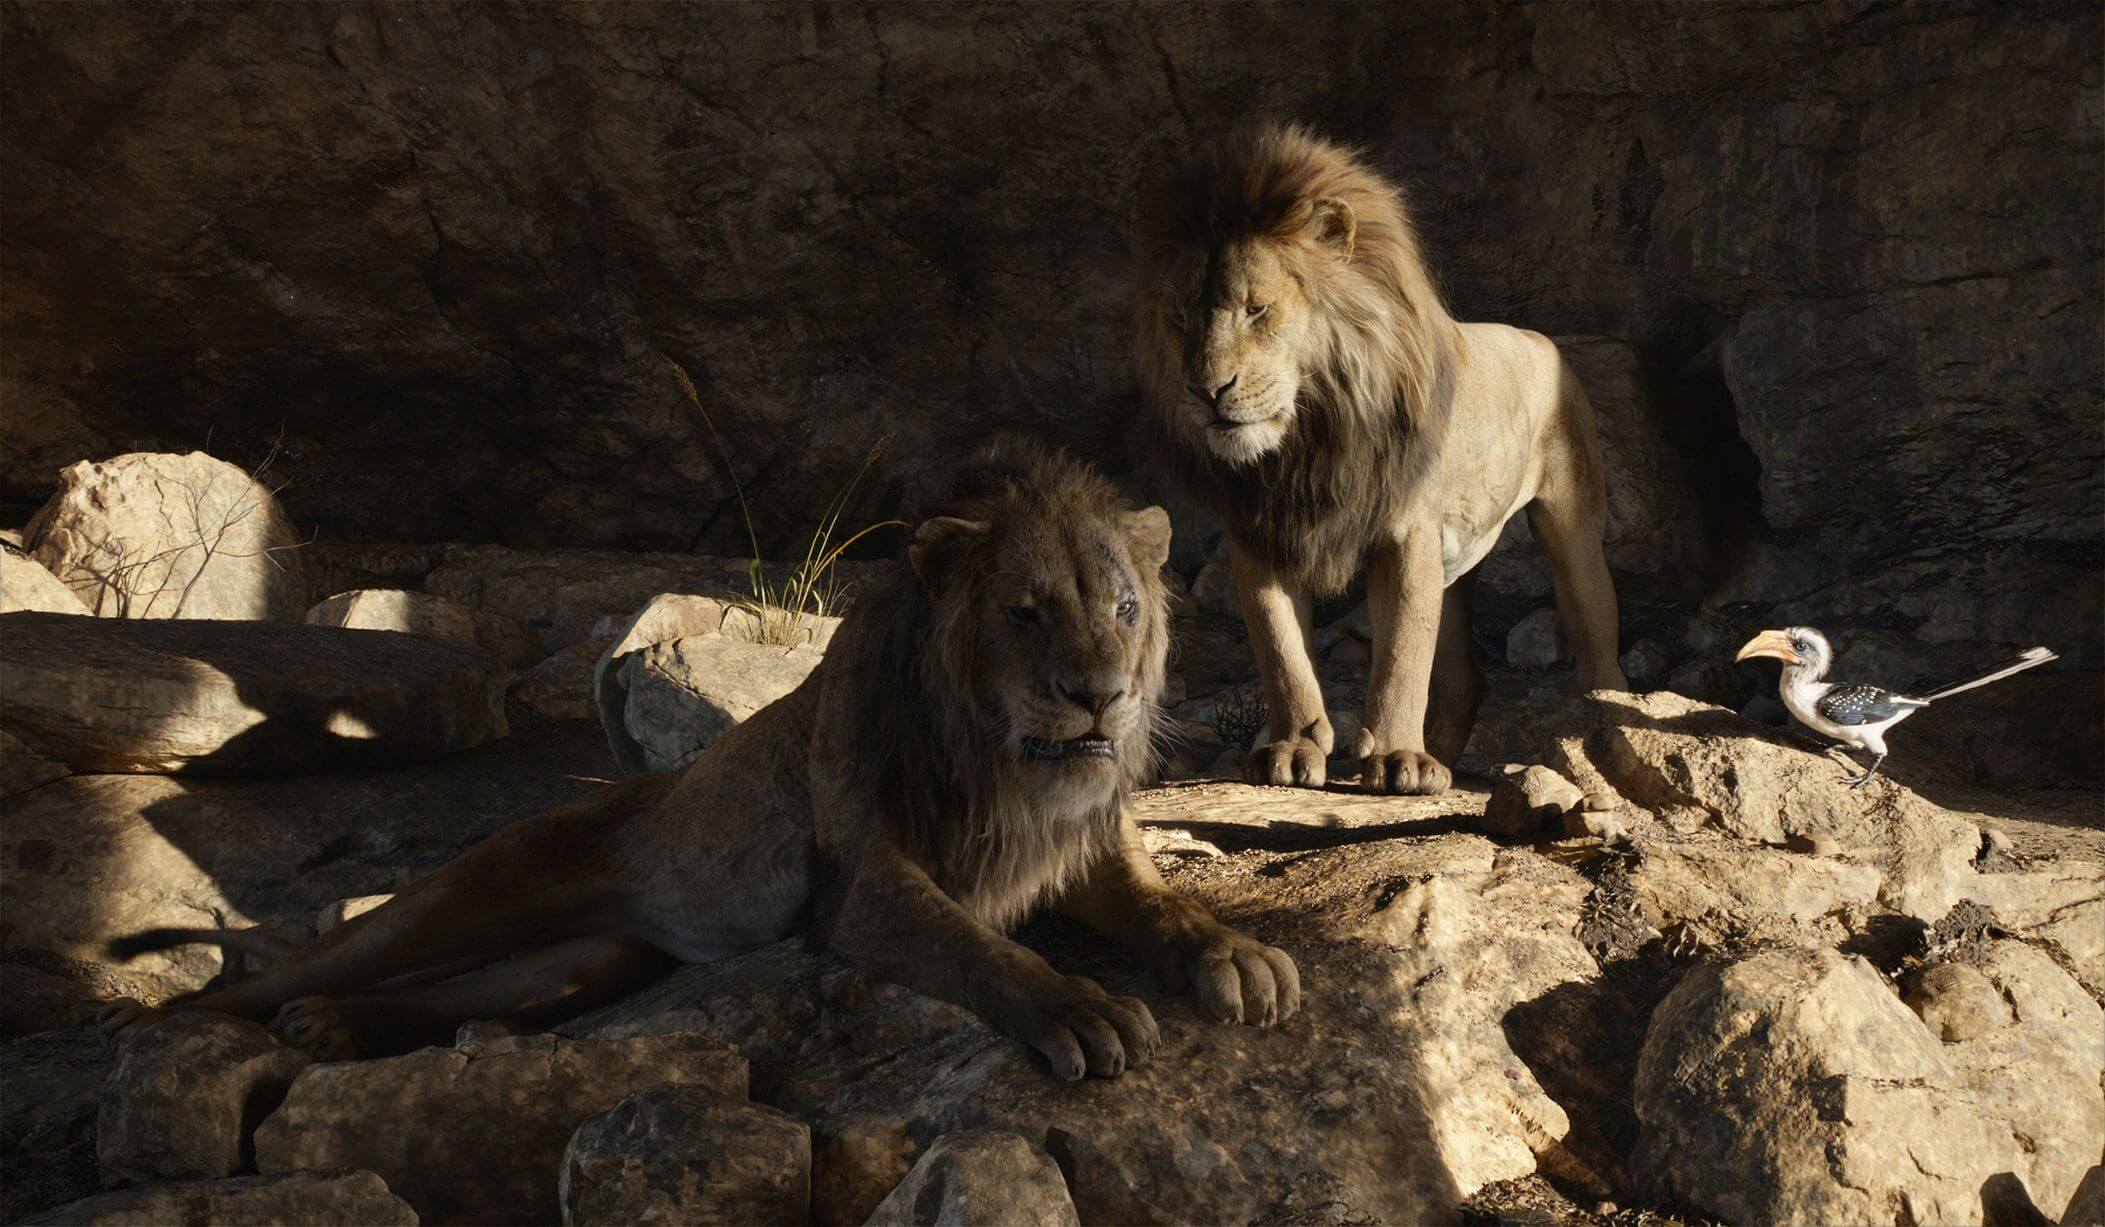 watch lion king 2 freeform